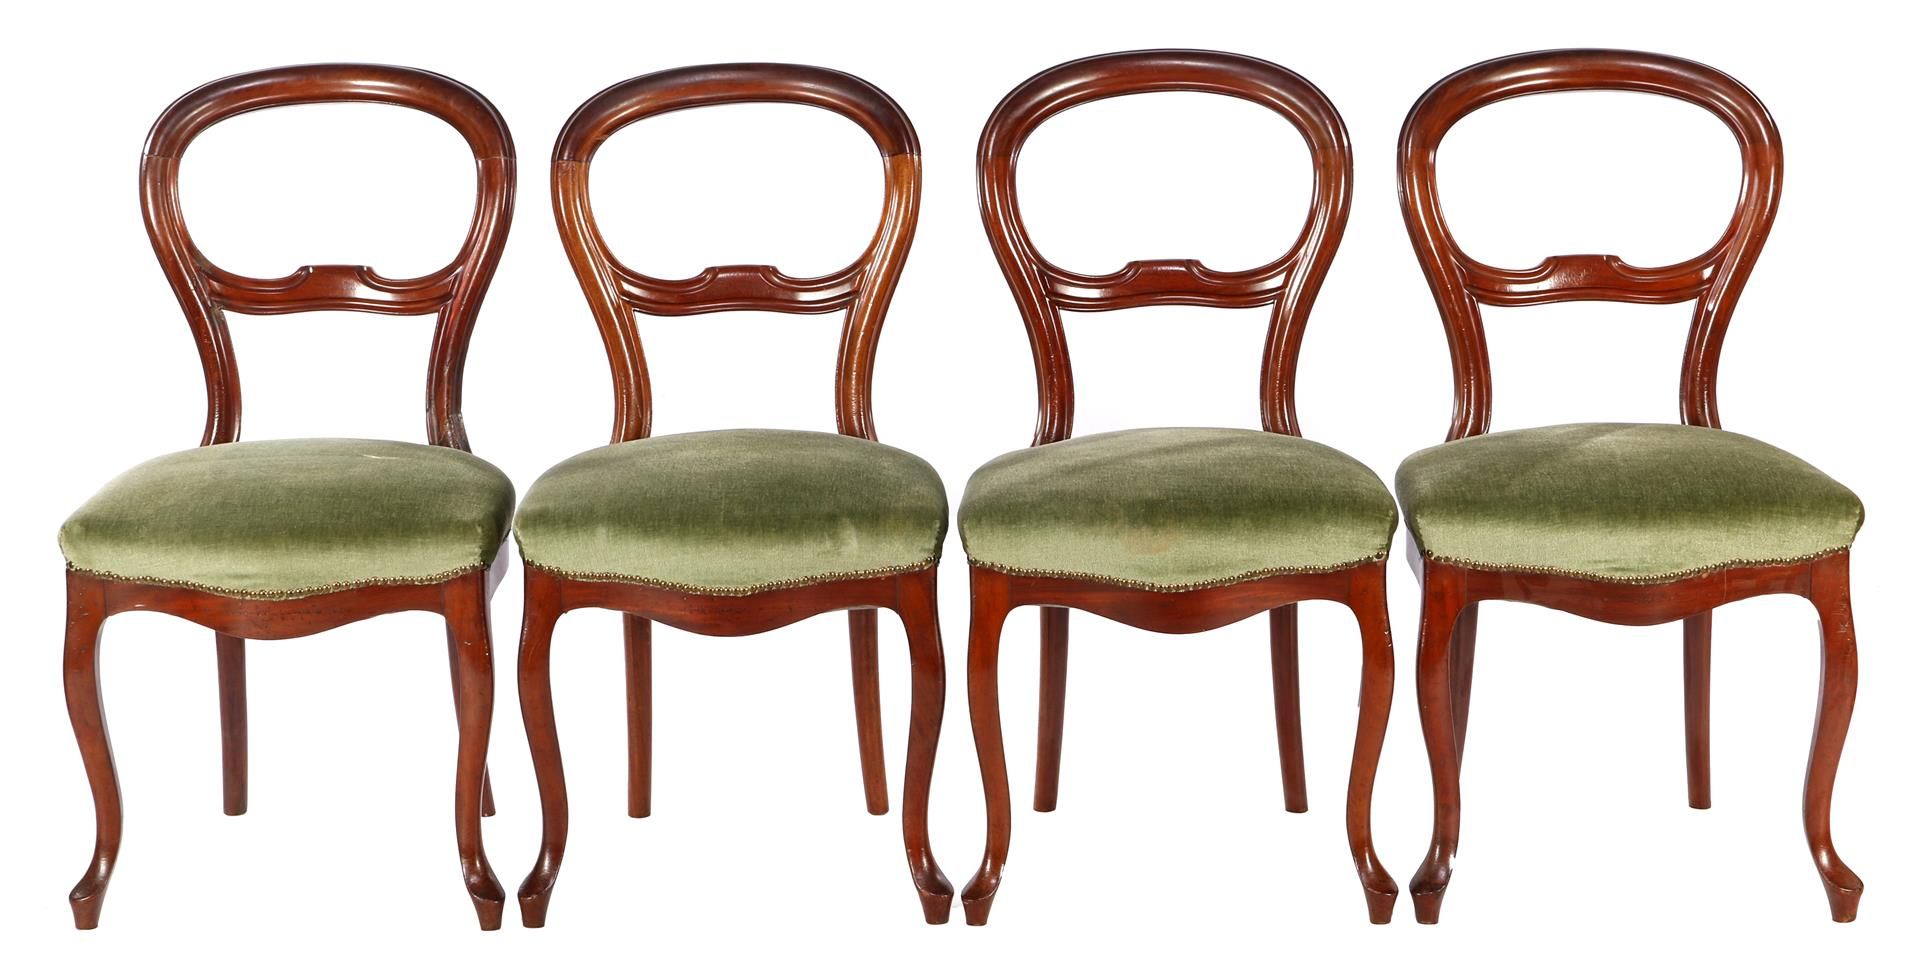 4 mahogany dining room chairs with balloon backs